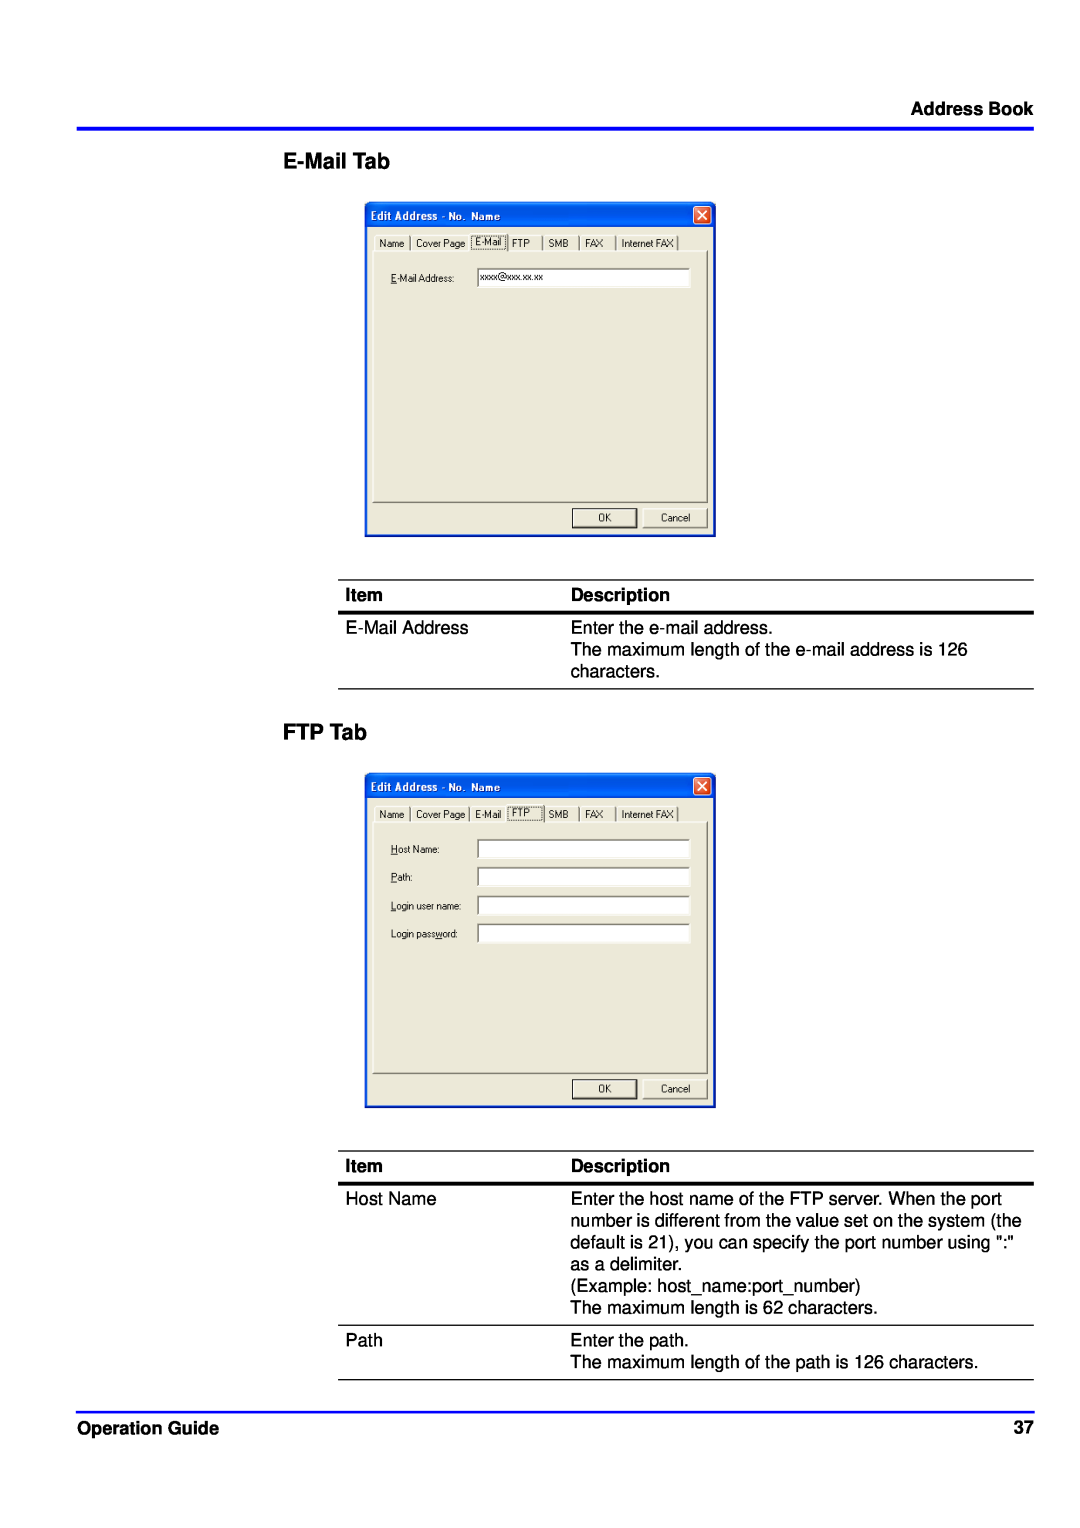 Kyocera KM-NET manual E-MailTab, FTP Tab, Address Book, Description, Item, Operation Guide 